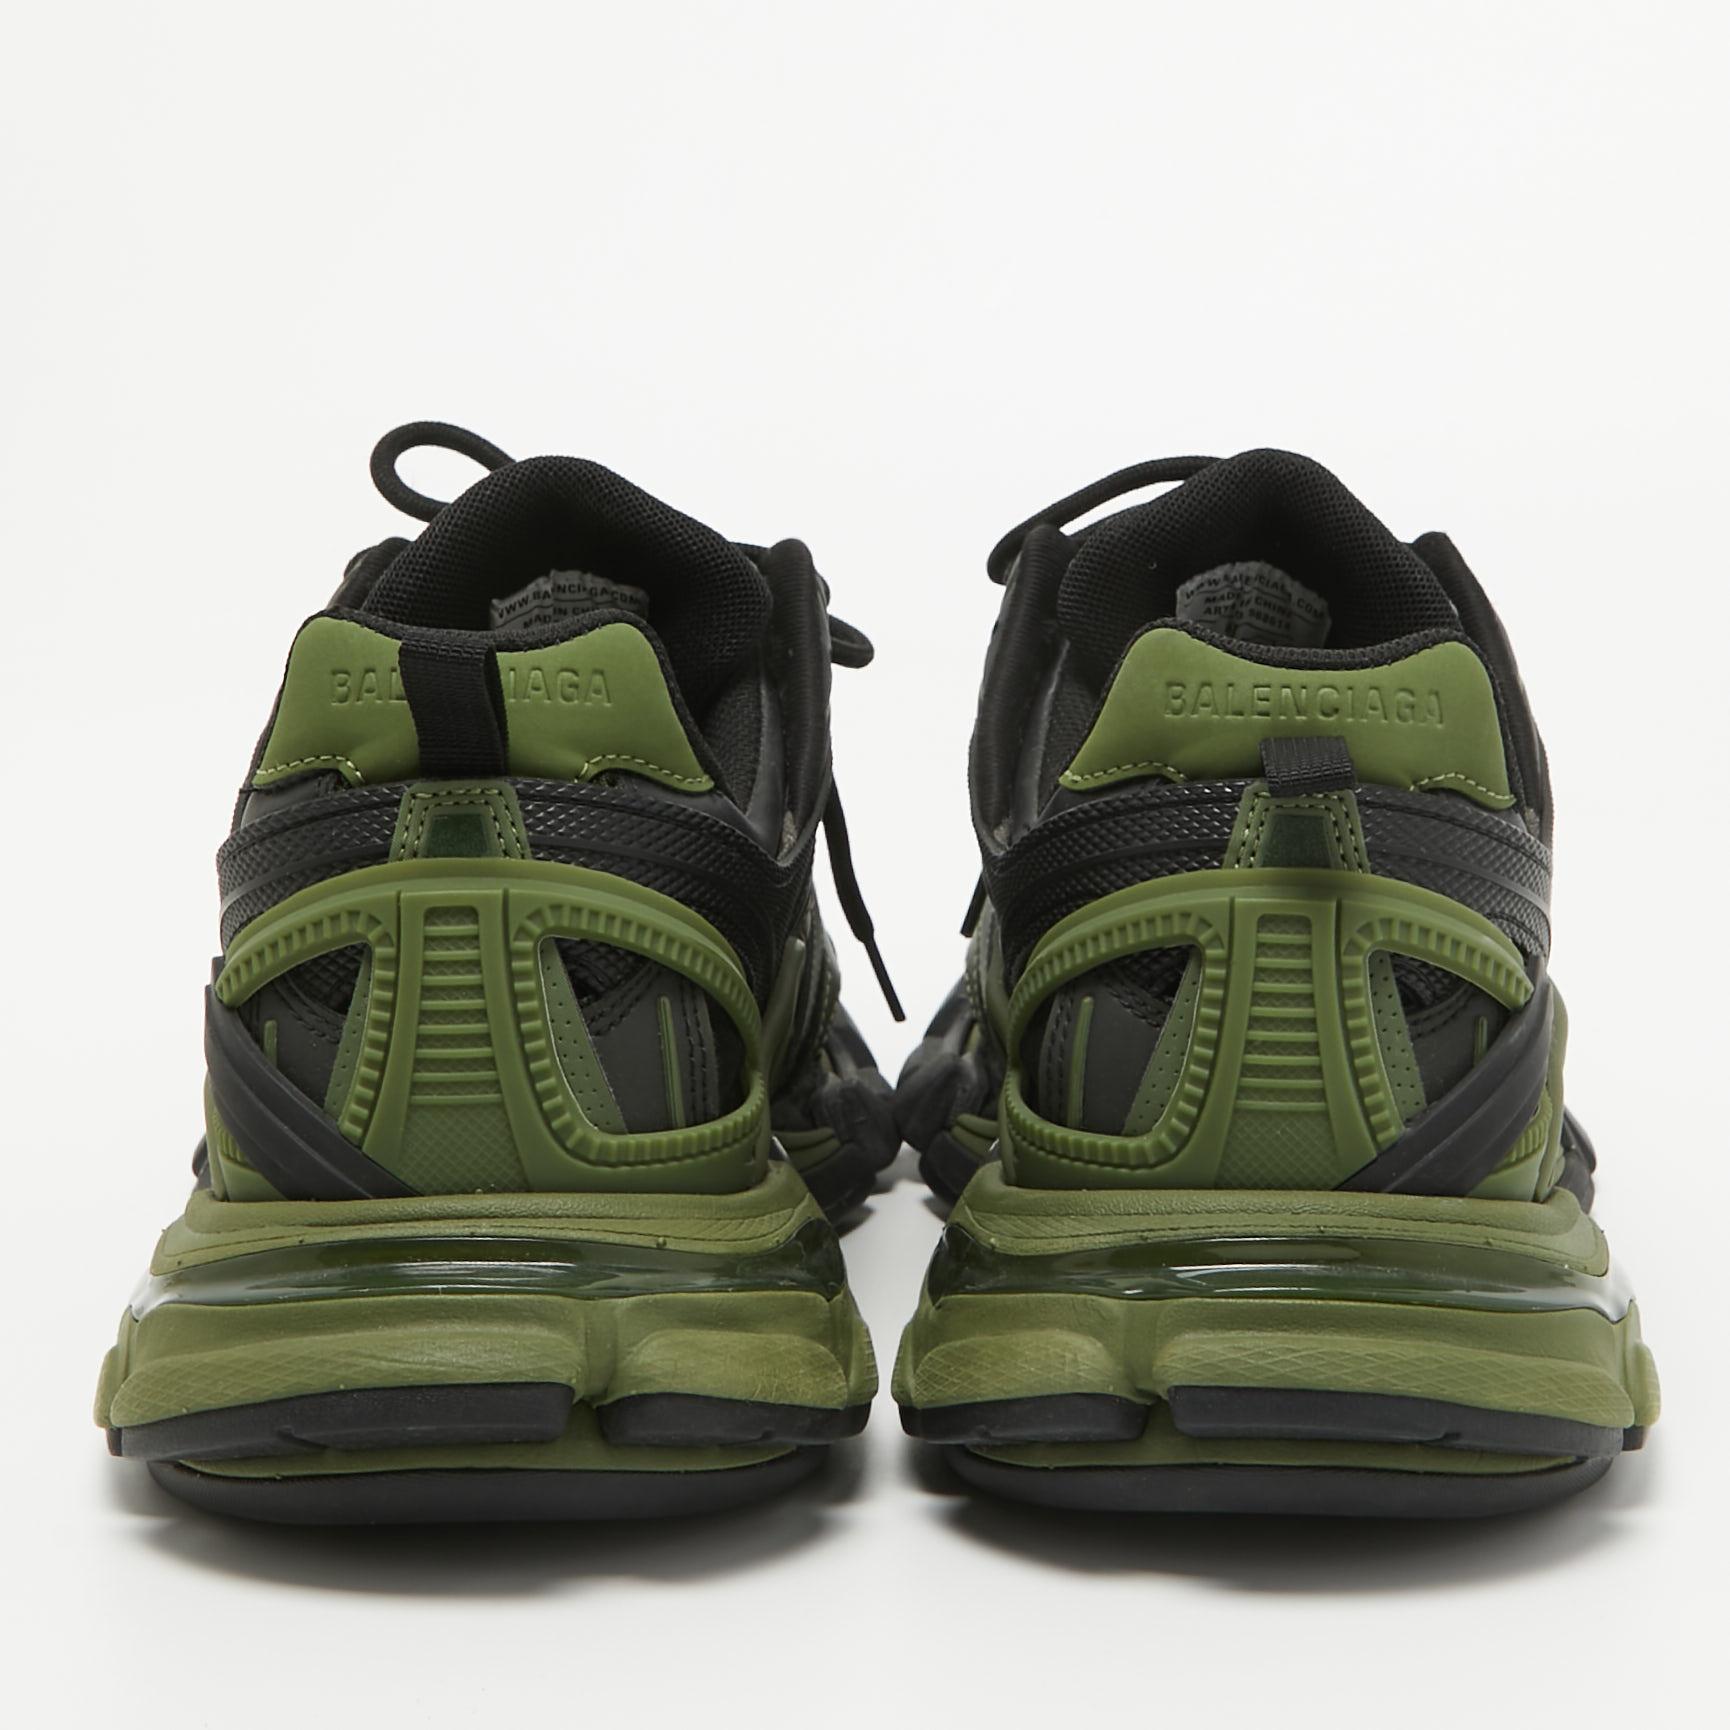 Balenciaga Green/Black Rubber and Leather Track Sneakers Size 42 In Excellent Condition For Sale In Dubai, Al Qouz 2